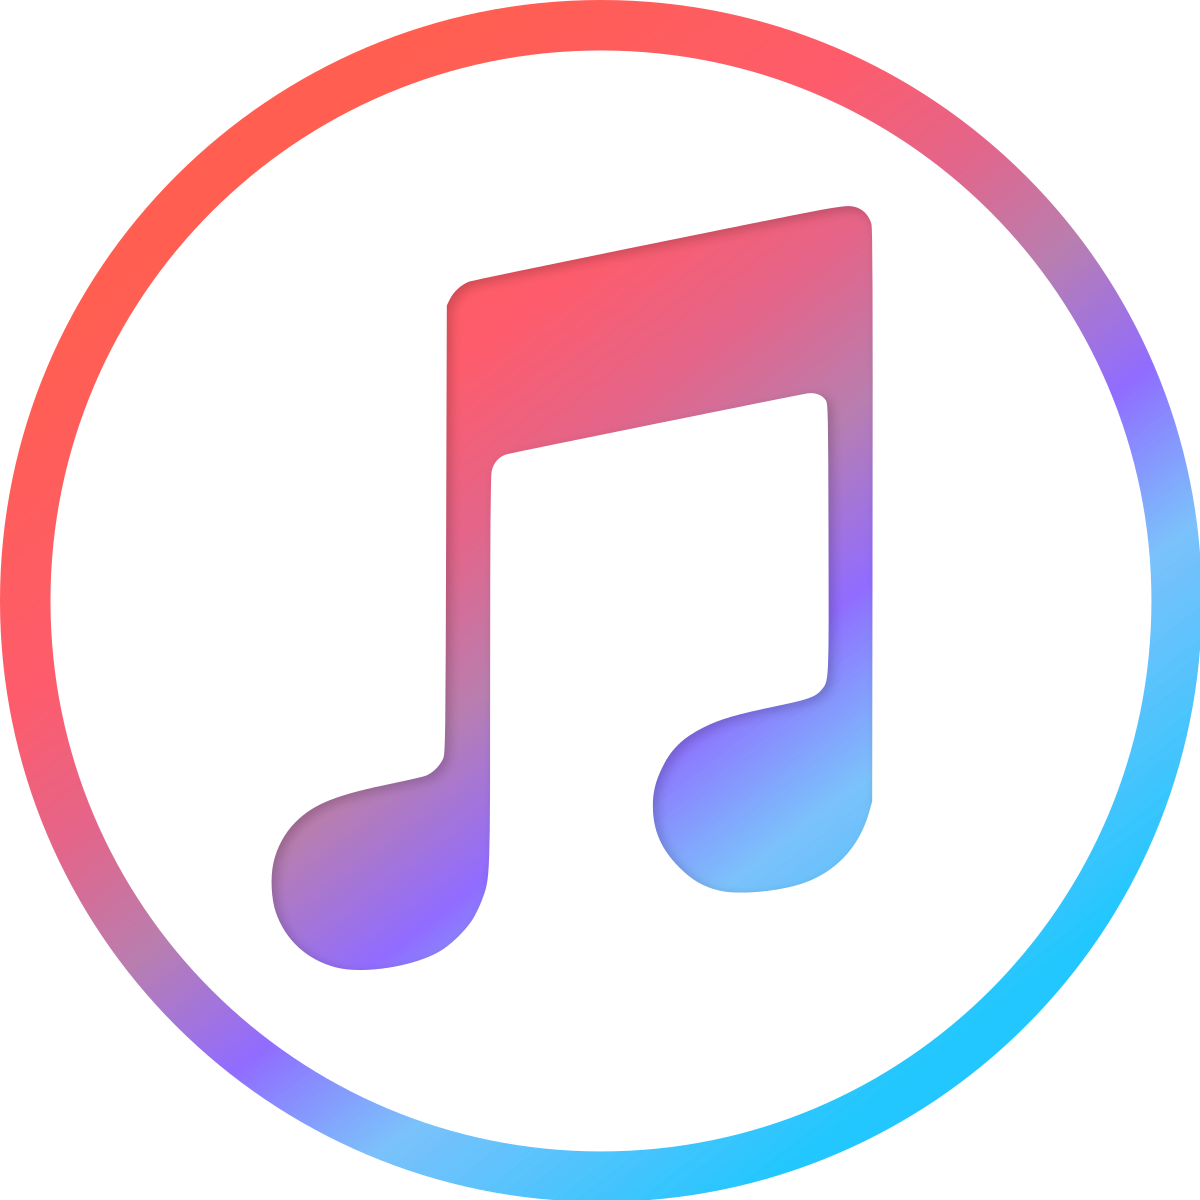 Apple Music Logo PNG